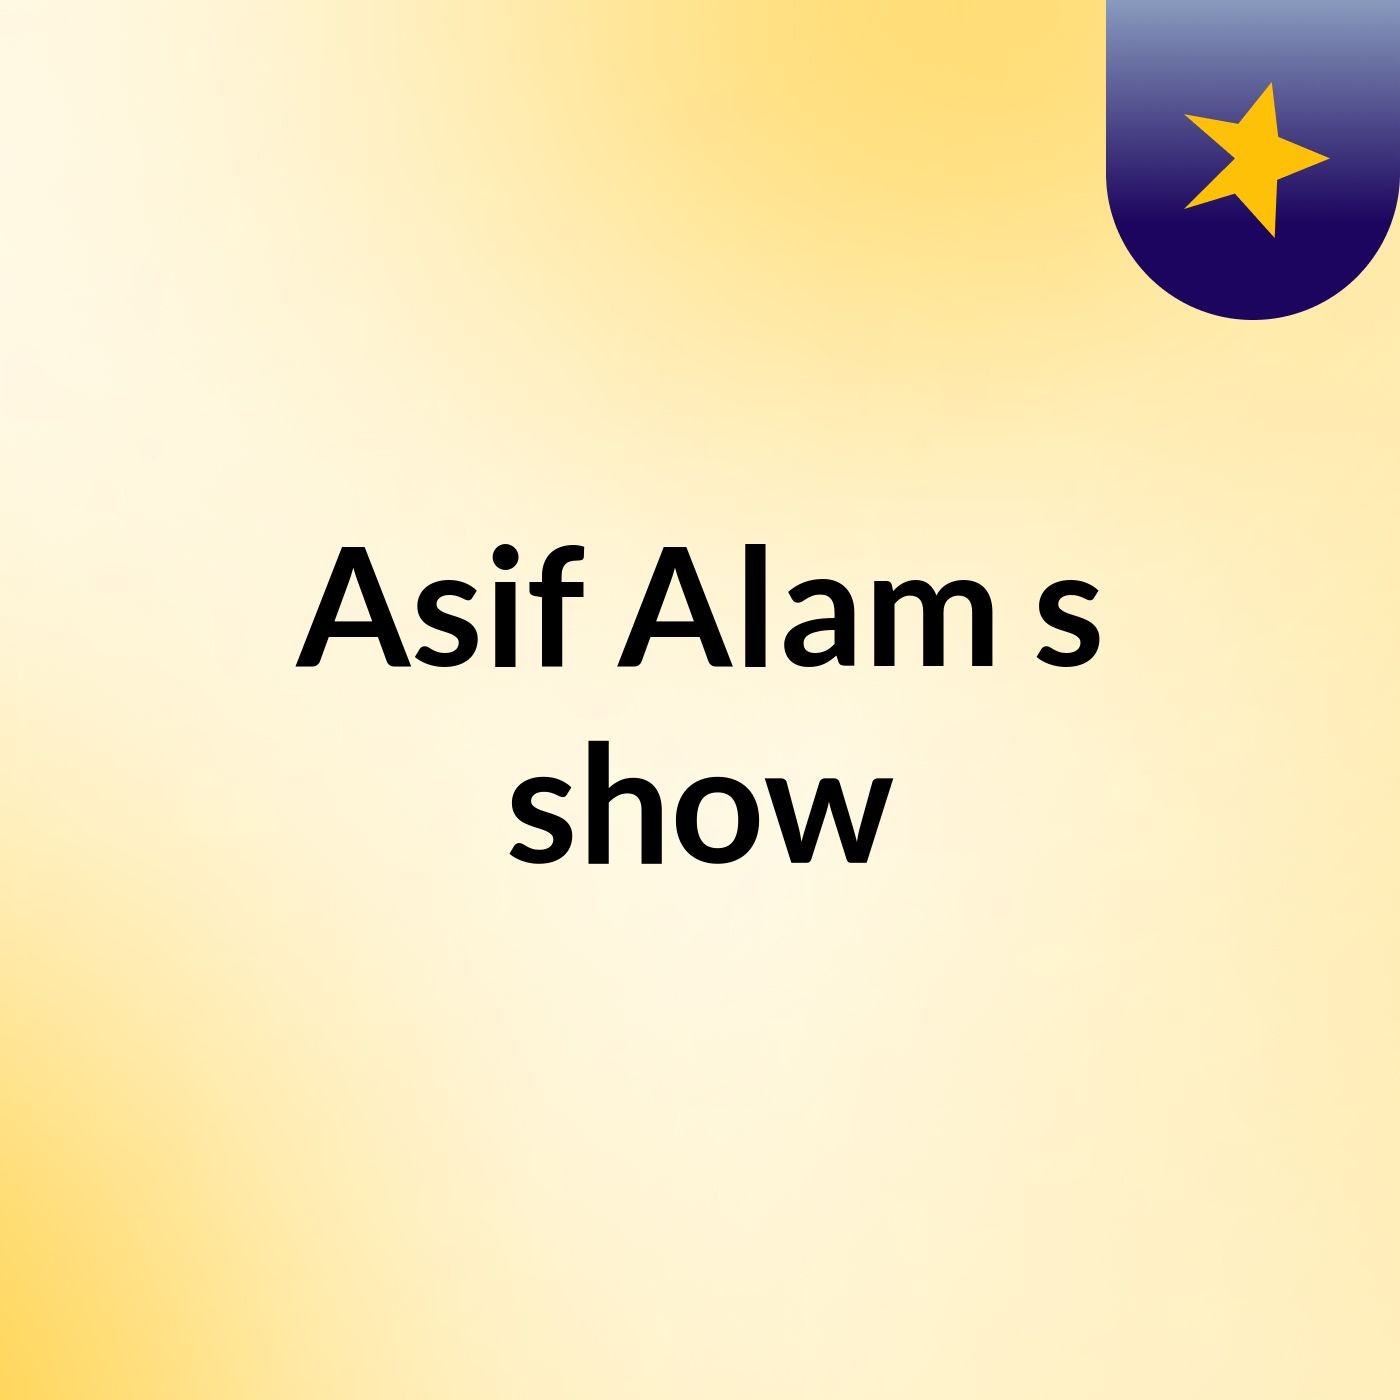 Asif Alam's show